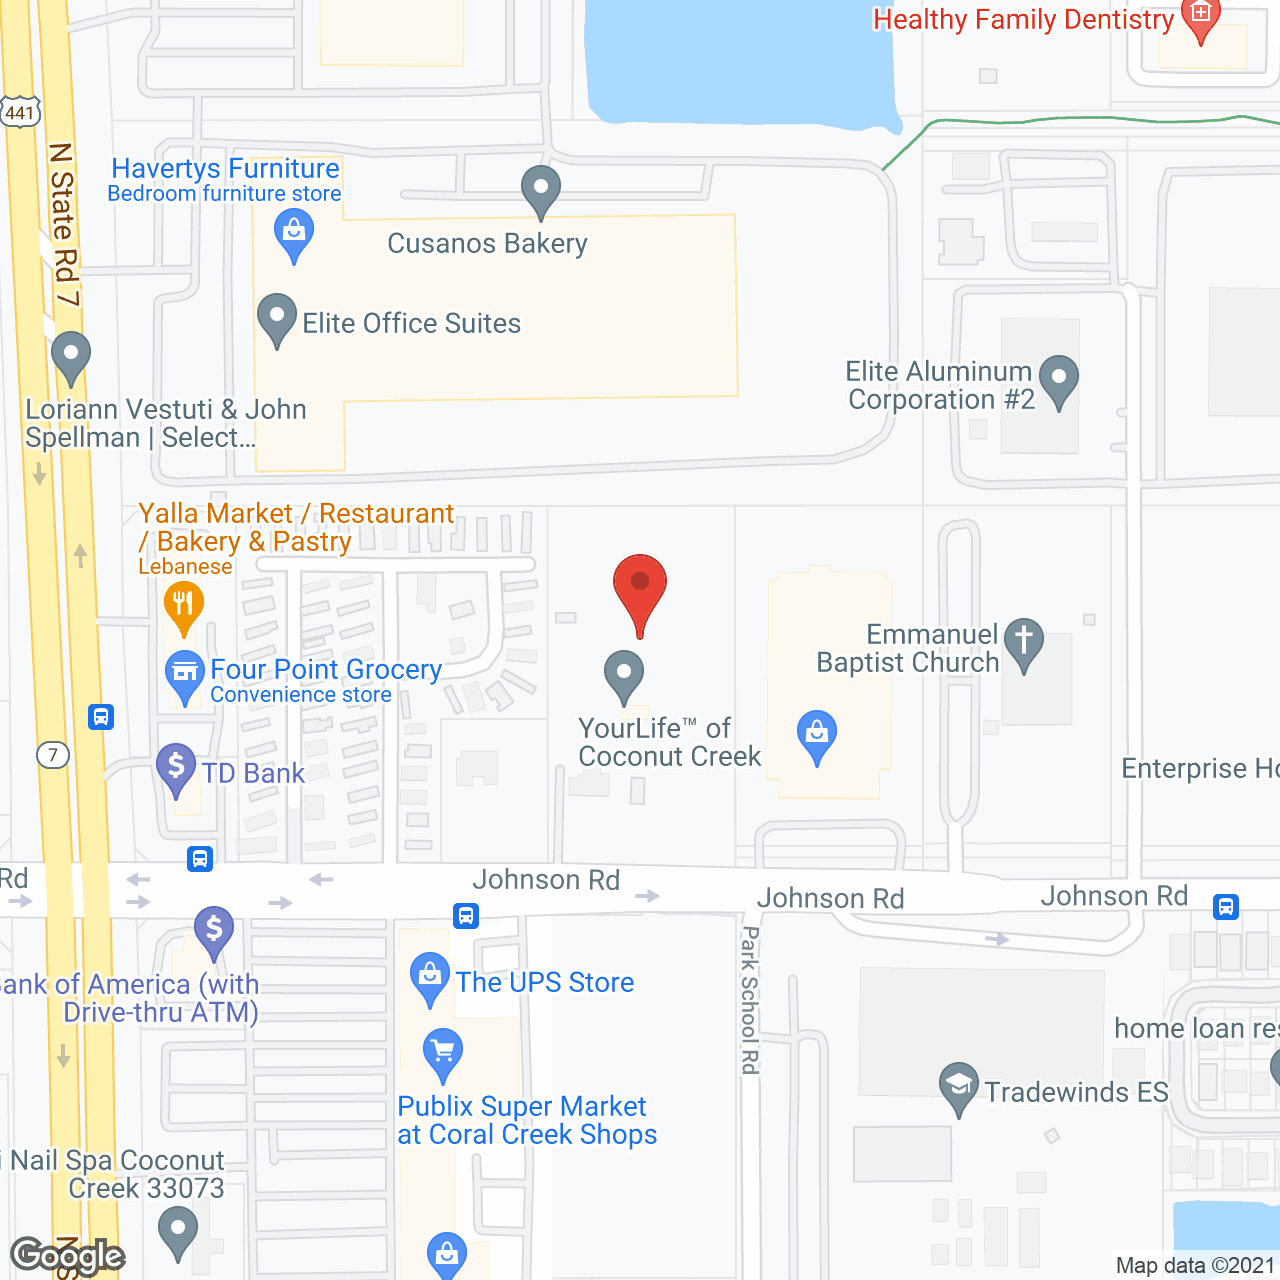 YourLife of Coconut Creek in google map